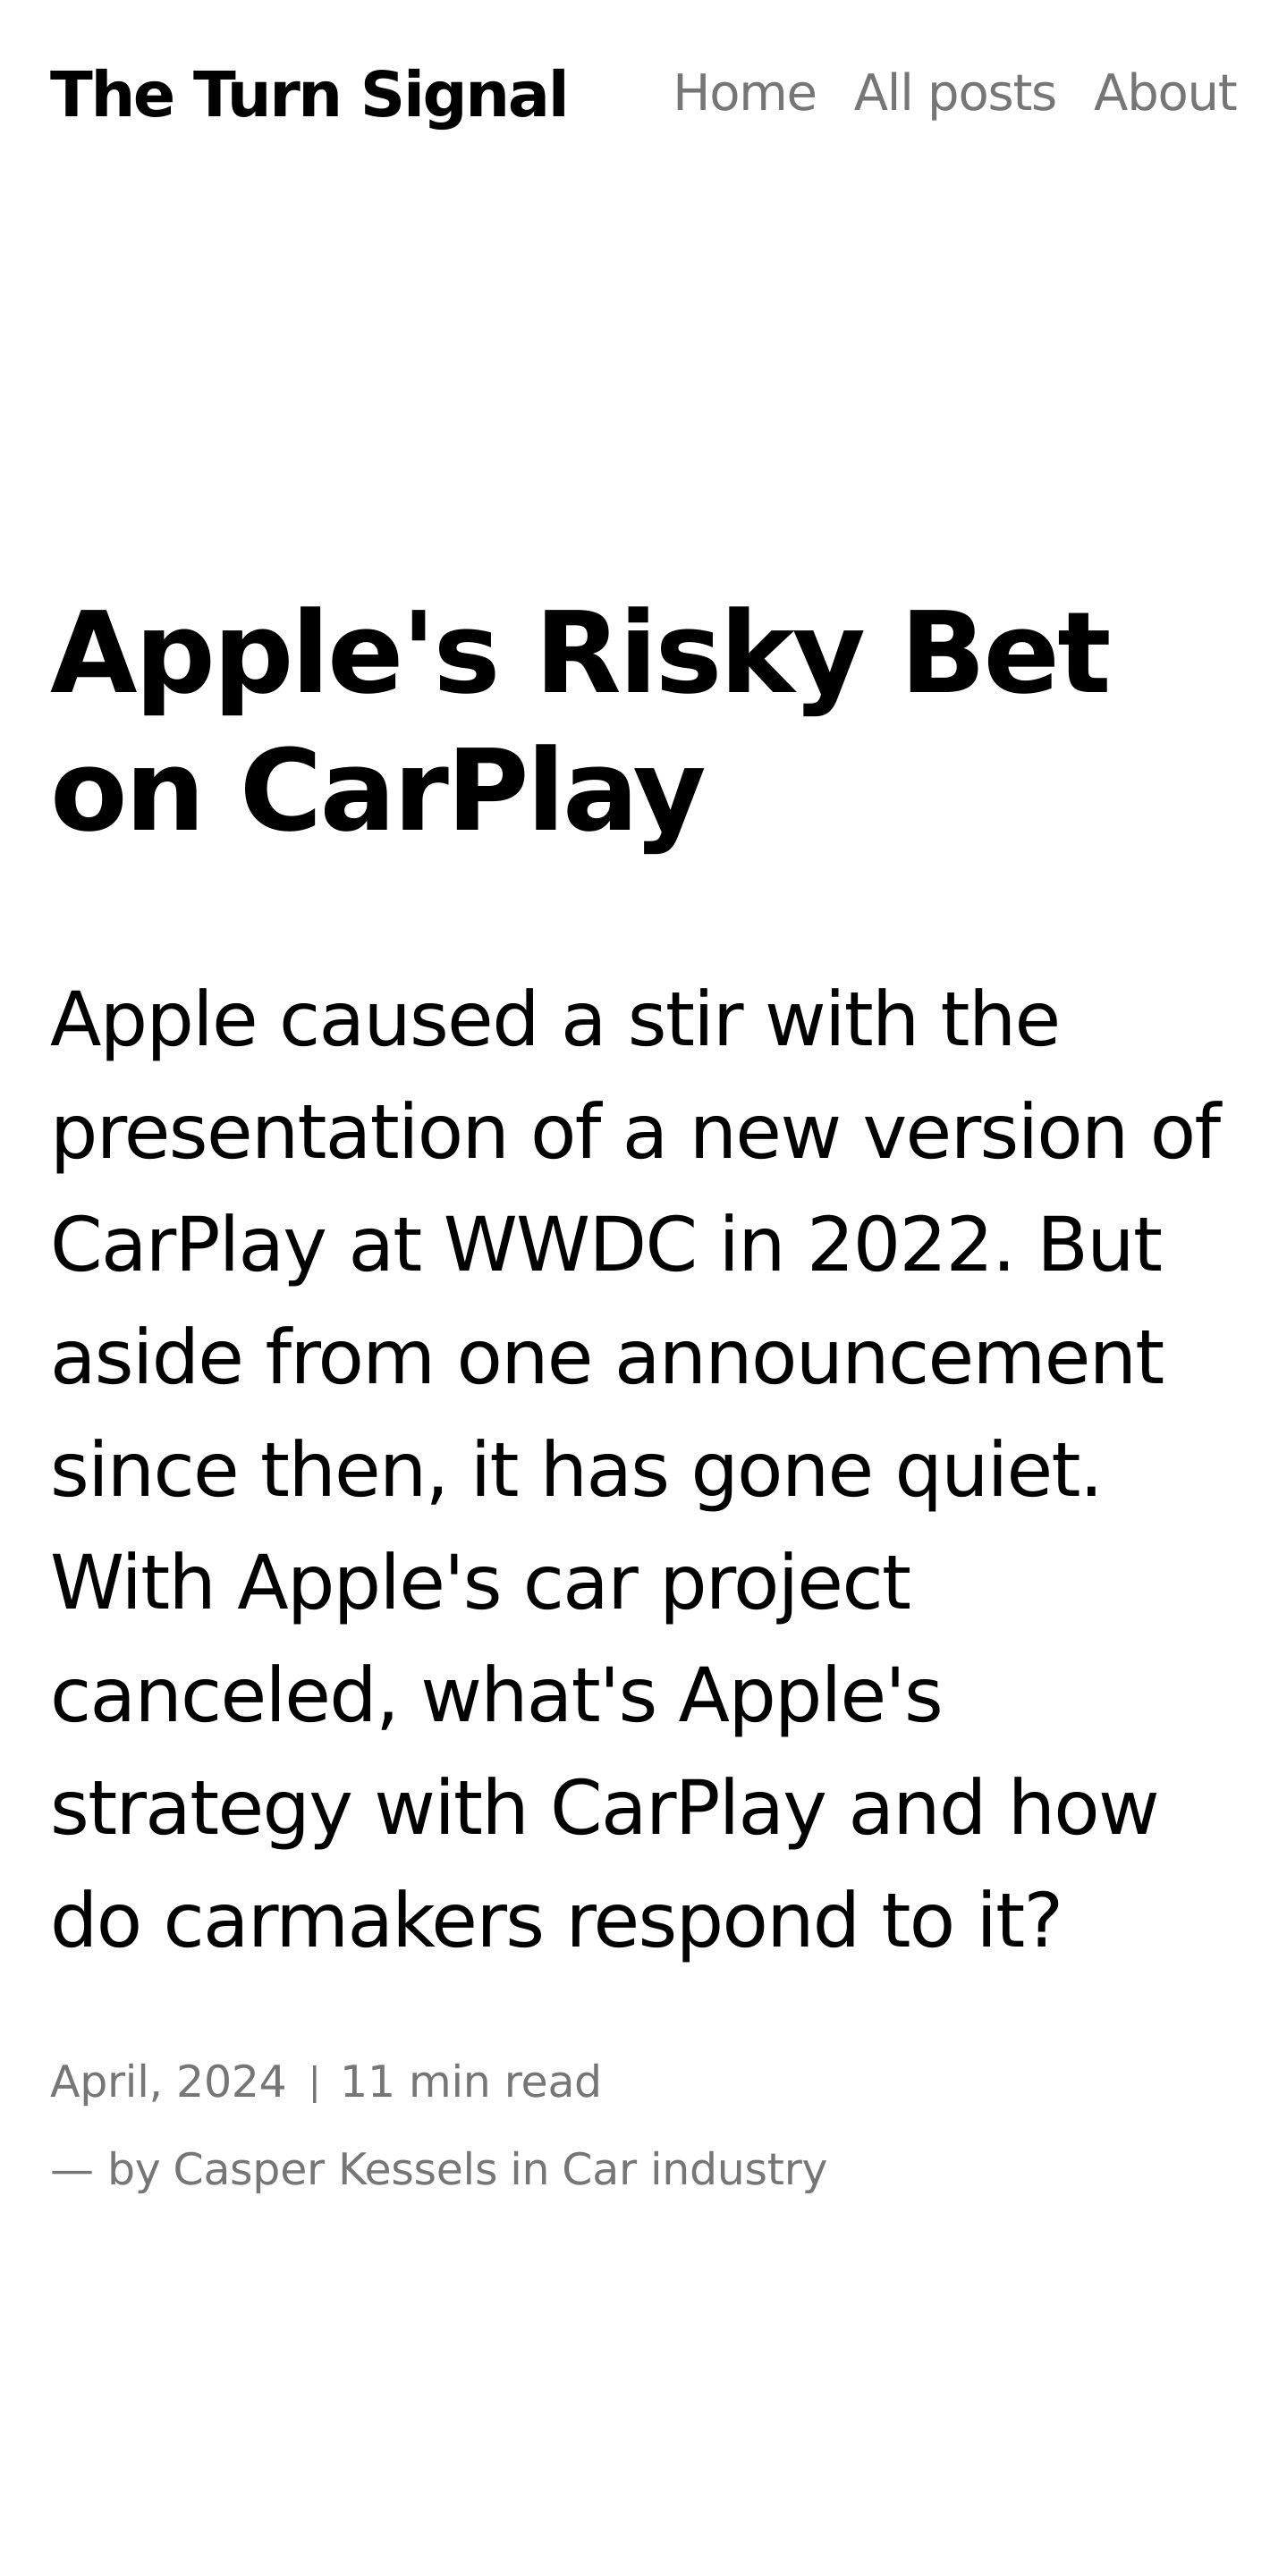 Apple's risky bet on CarPlay